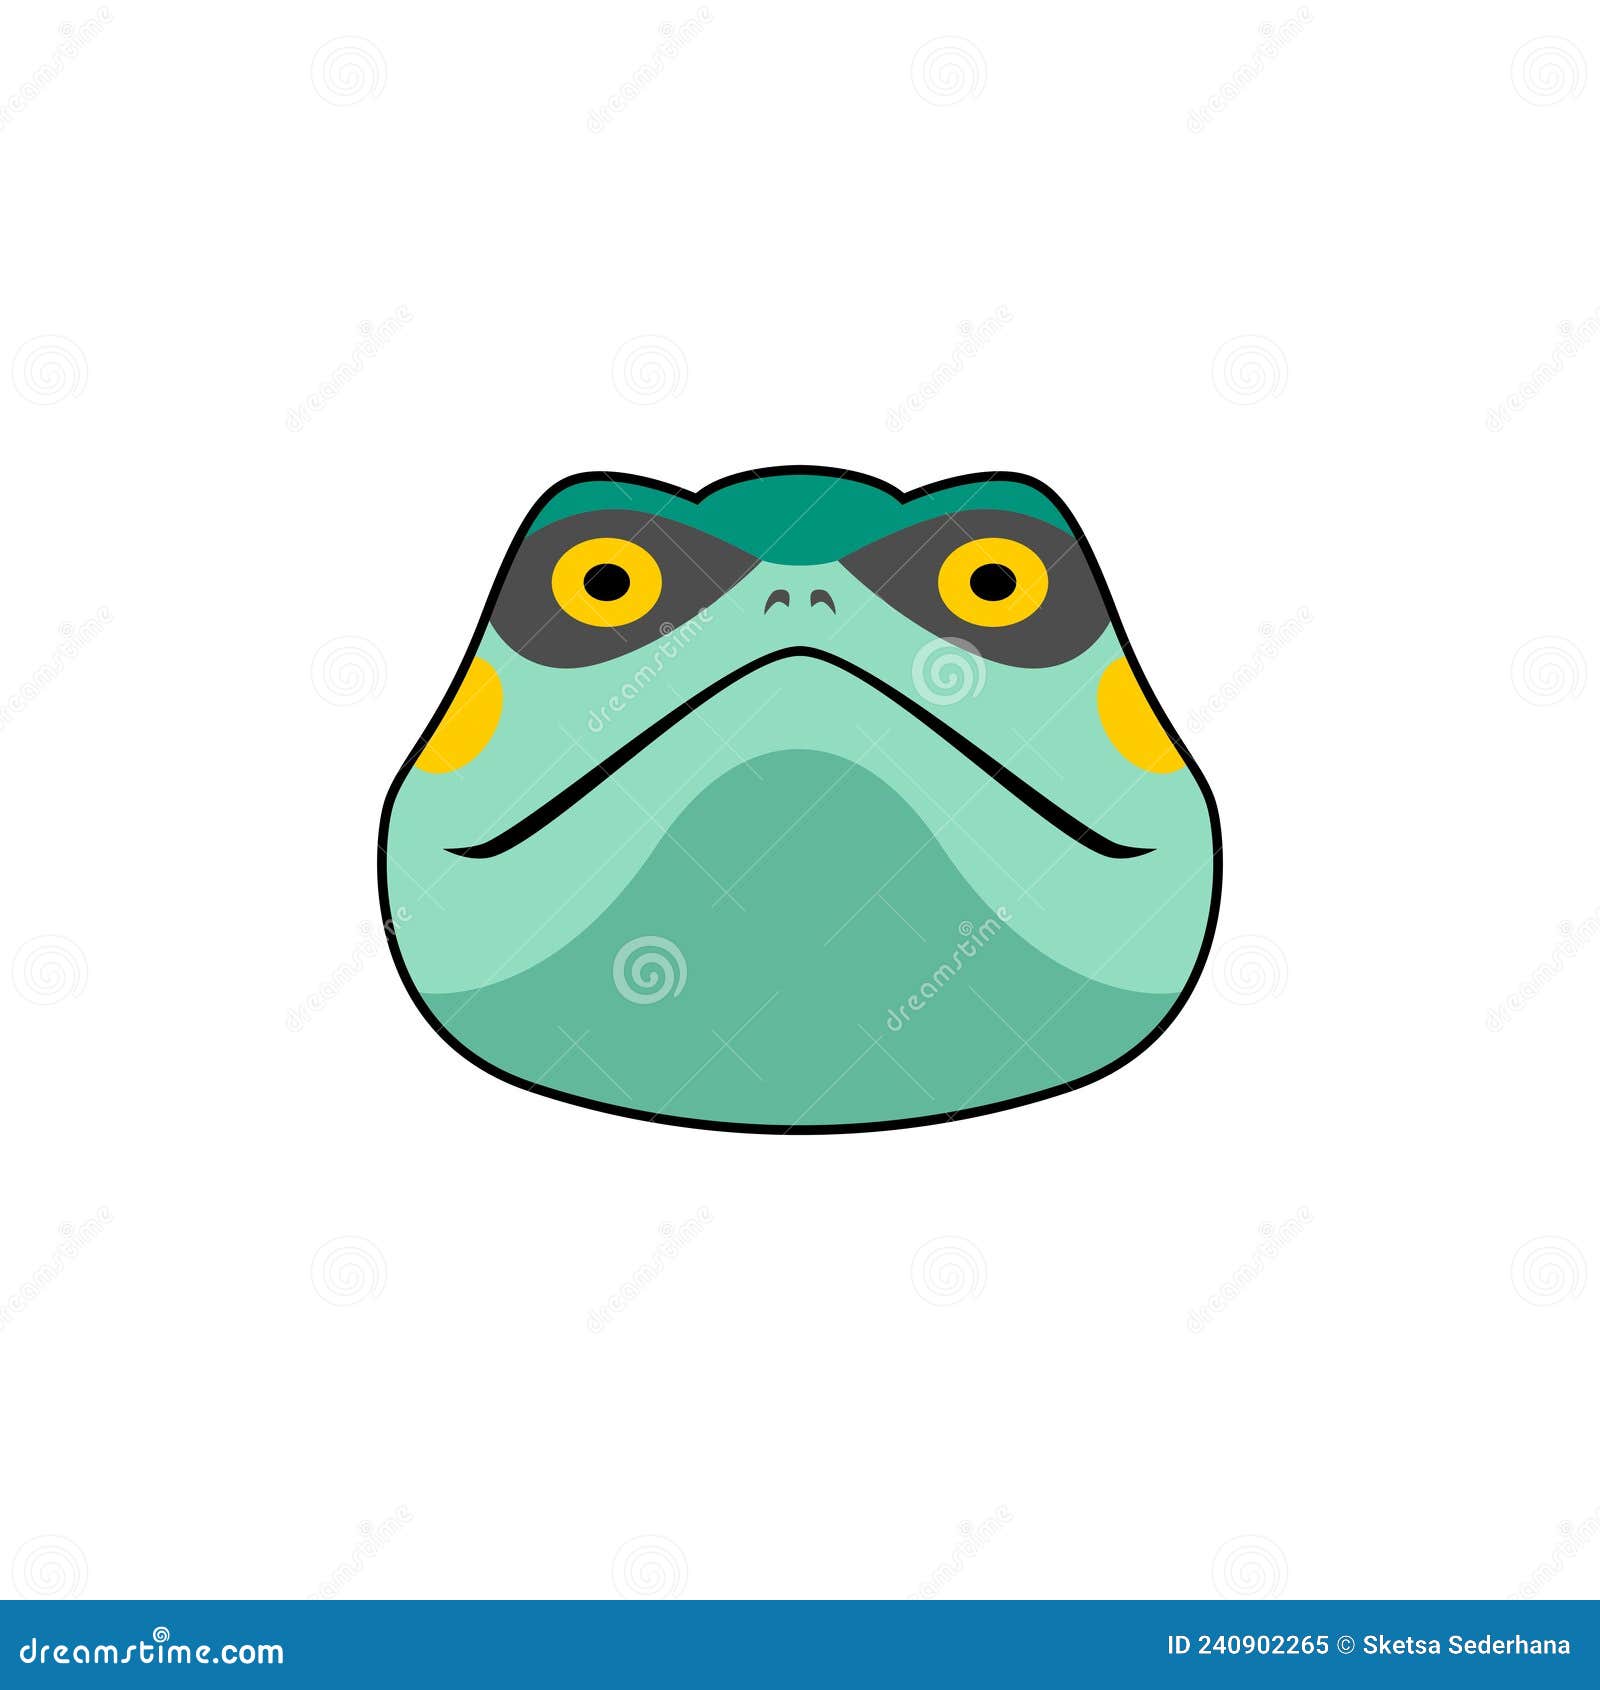 Gamhiro frog vector design stock vector. Illustration of action - 240902265